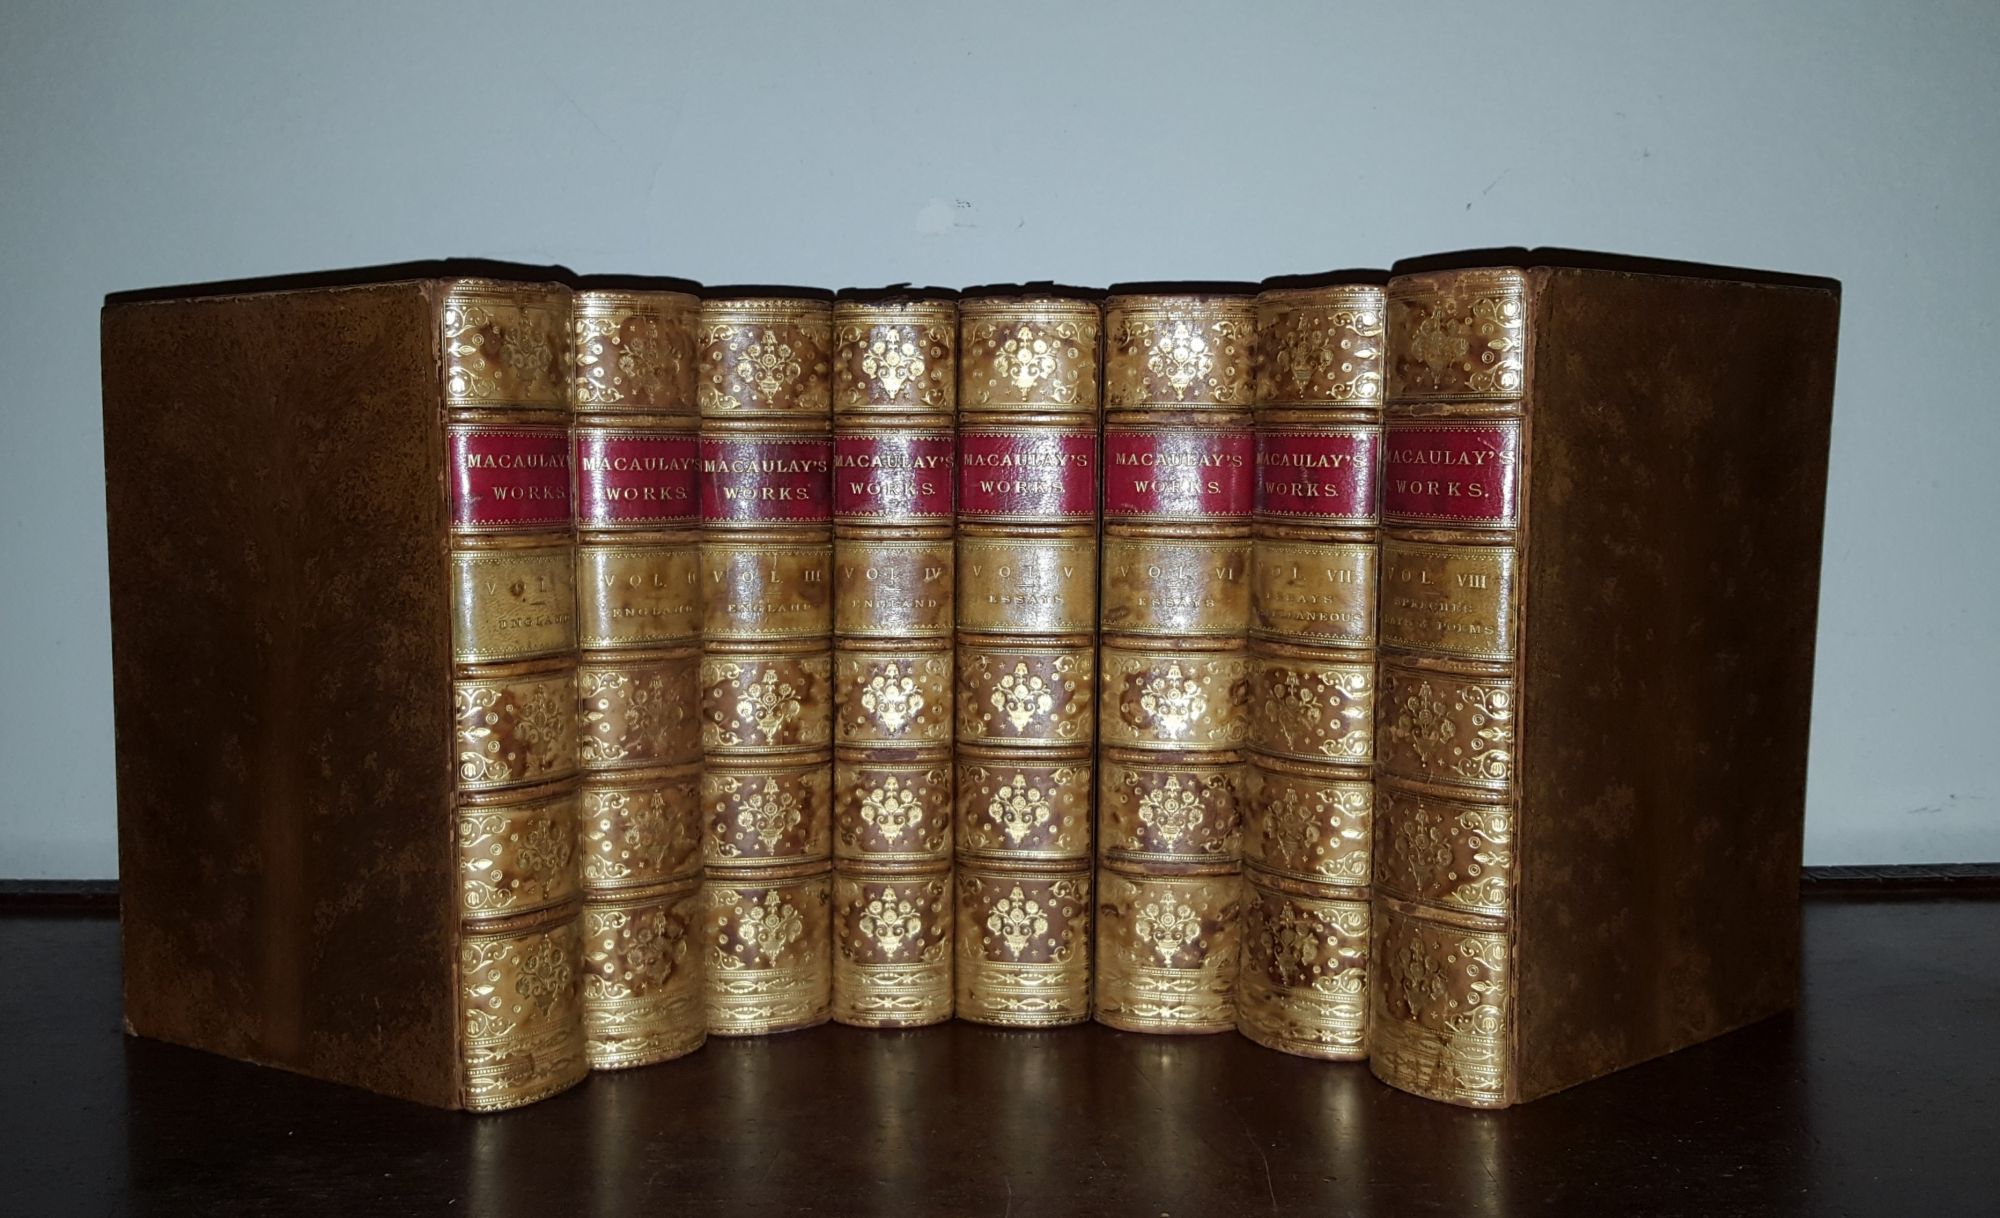 MACAULAY Thomas Babington, TREVELYAN Lady - The Works of Lord Macaulay in Eight Volumes